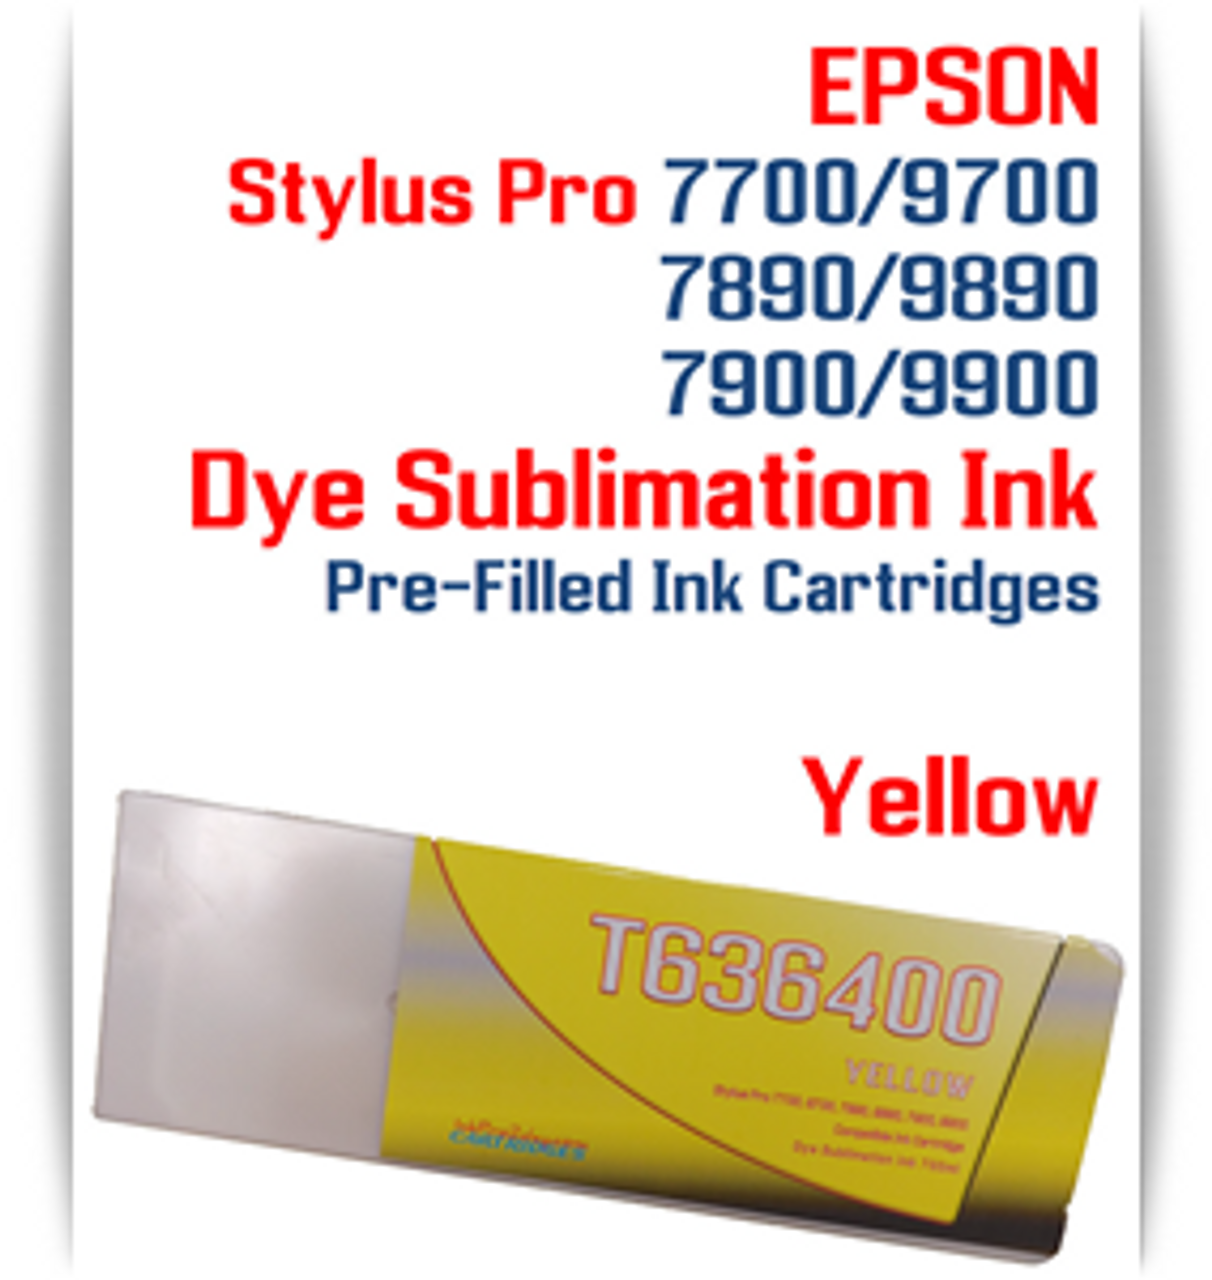 Yellow Epson Stylus Pro 7890/9890 Pre-Filled Dye Sublimation Ink Cartridge